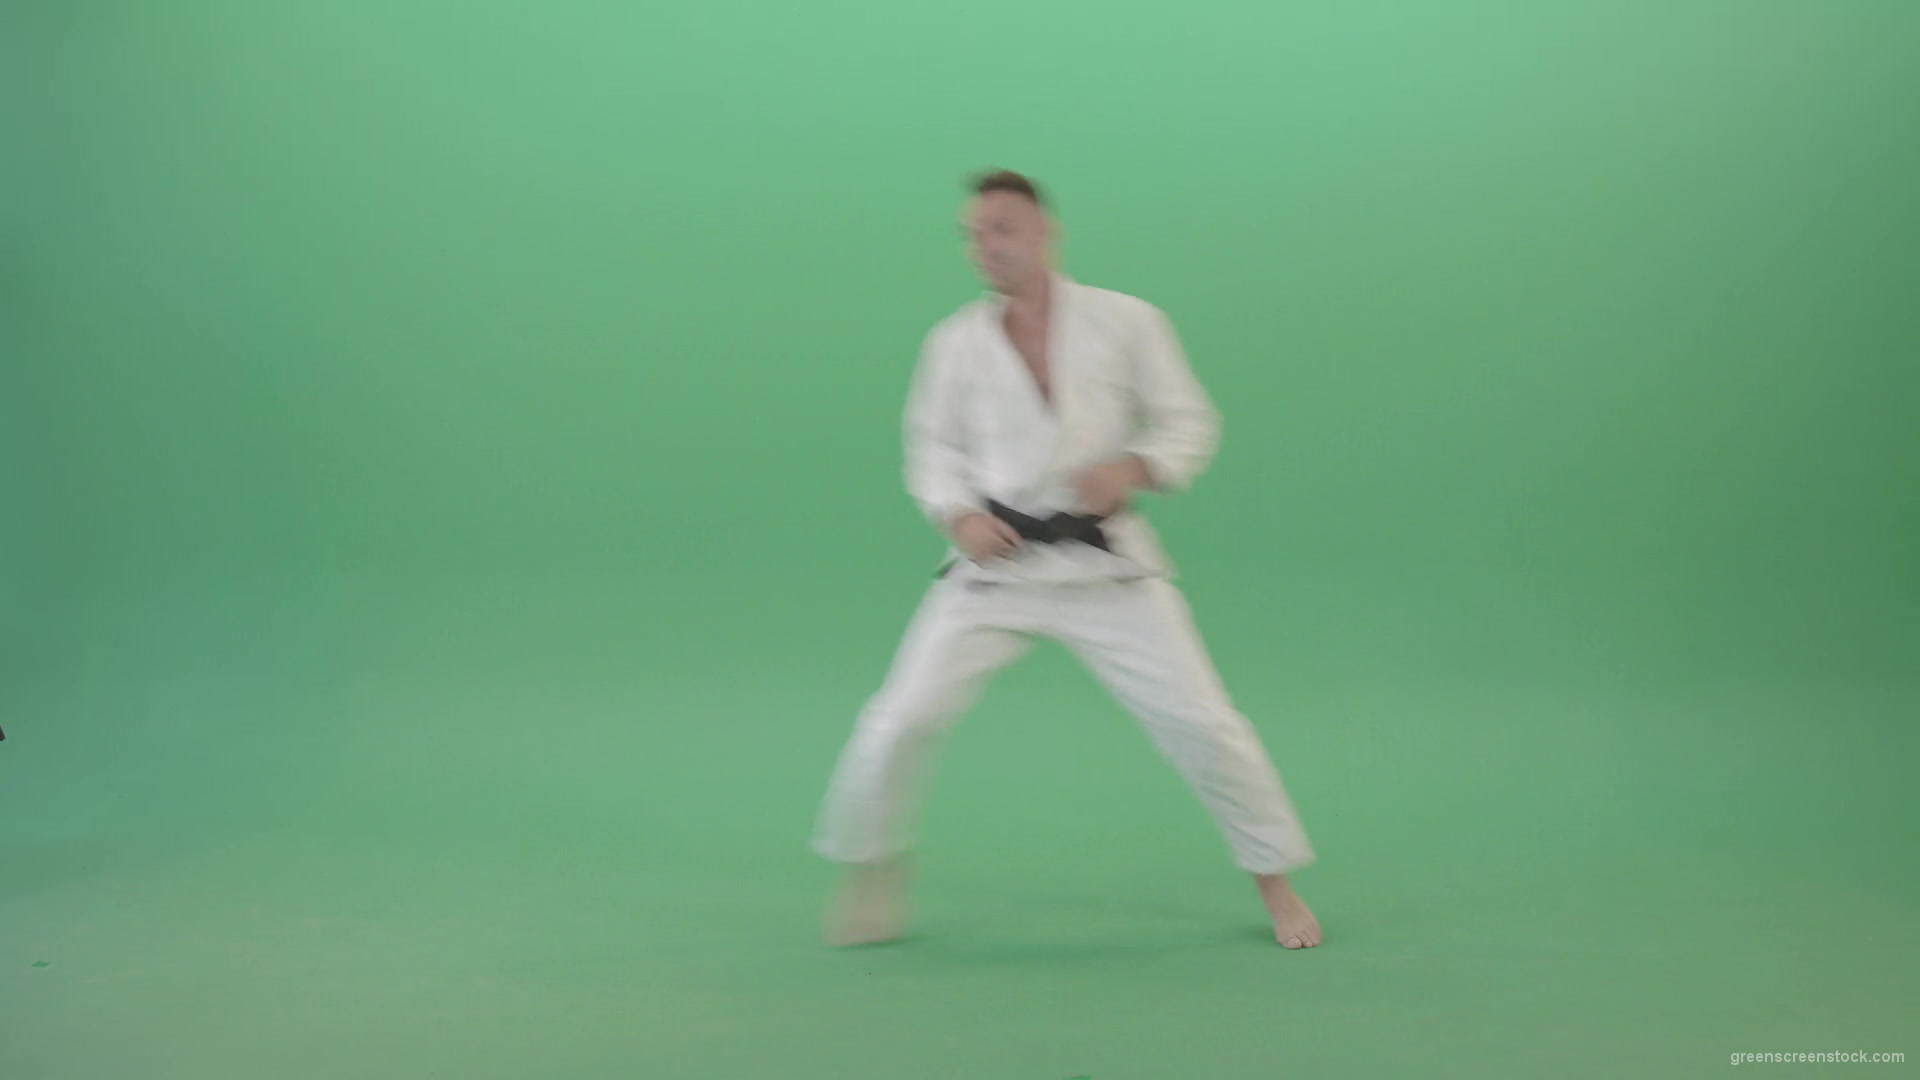 Karate-Sport-man-make-side-kick-isolated-on-green-screen-4K-Video-Footage-1920_008 Green Screen Stock